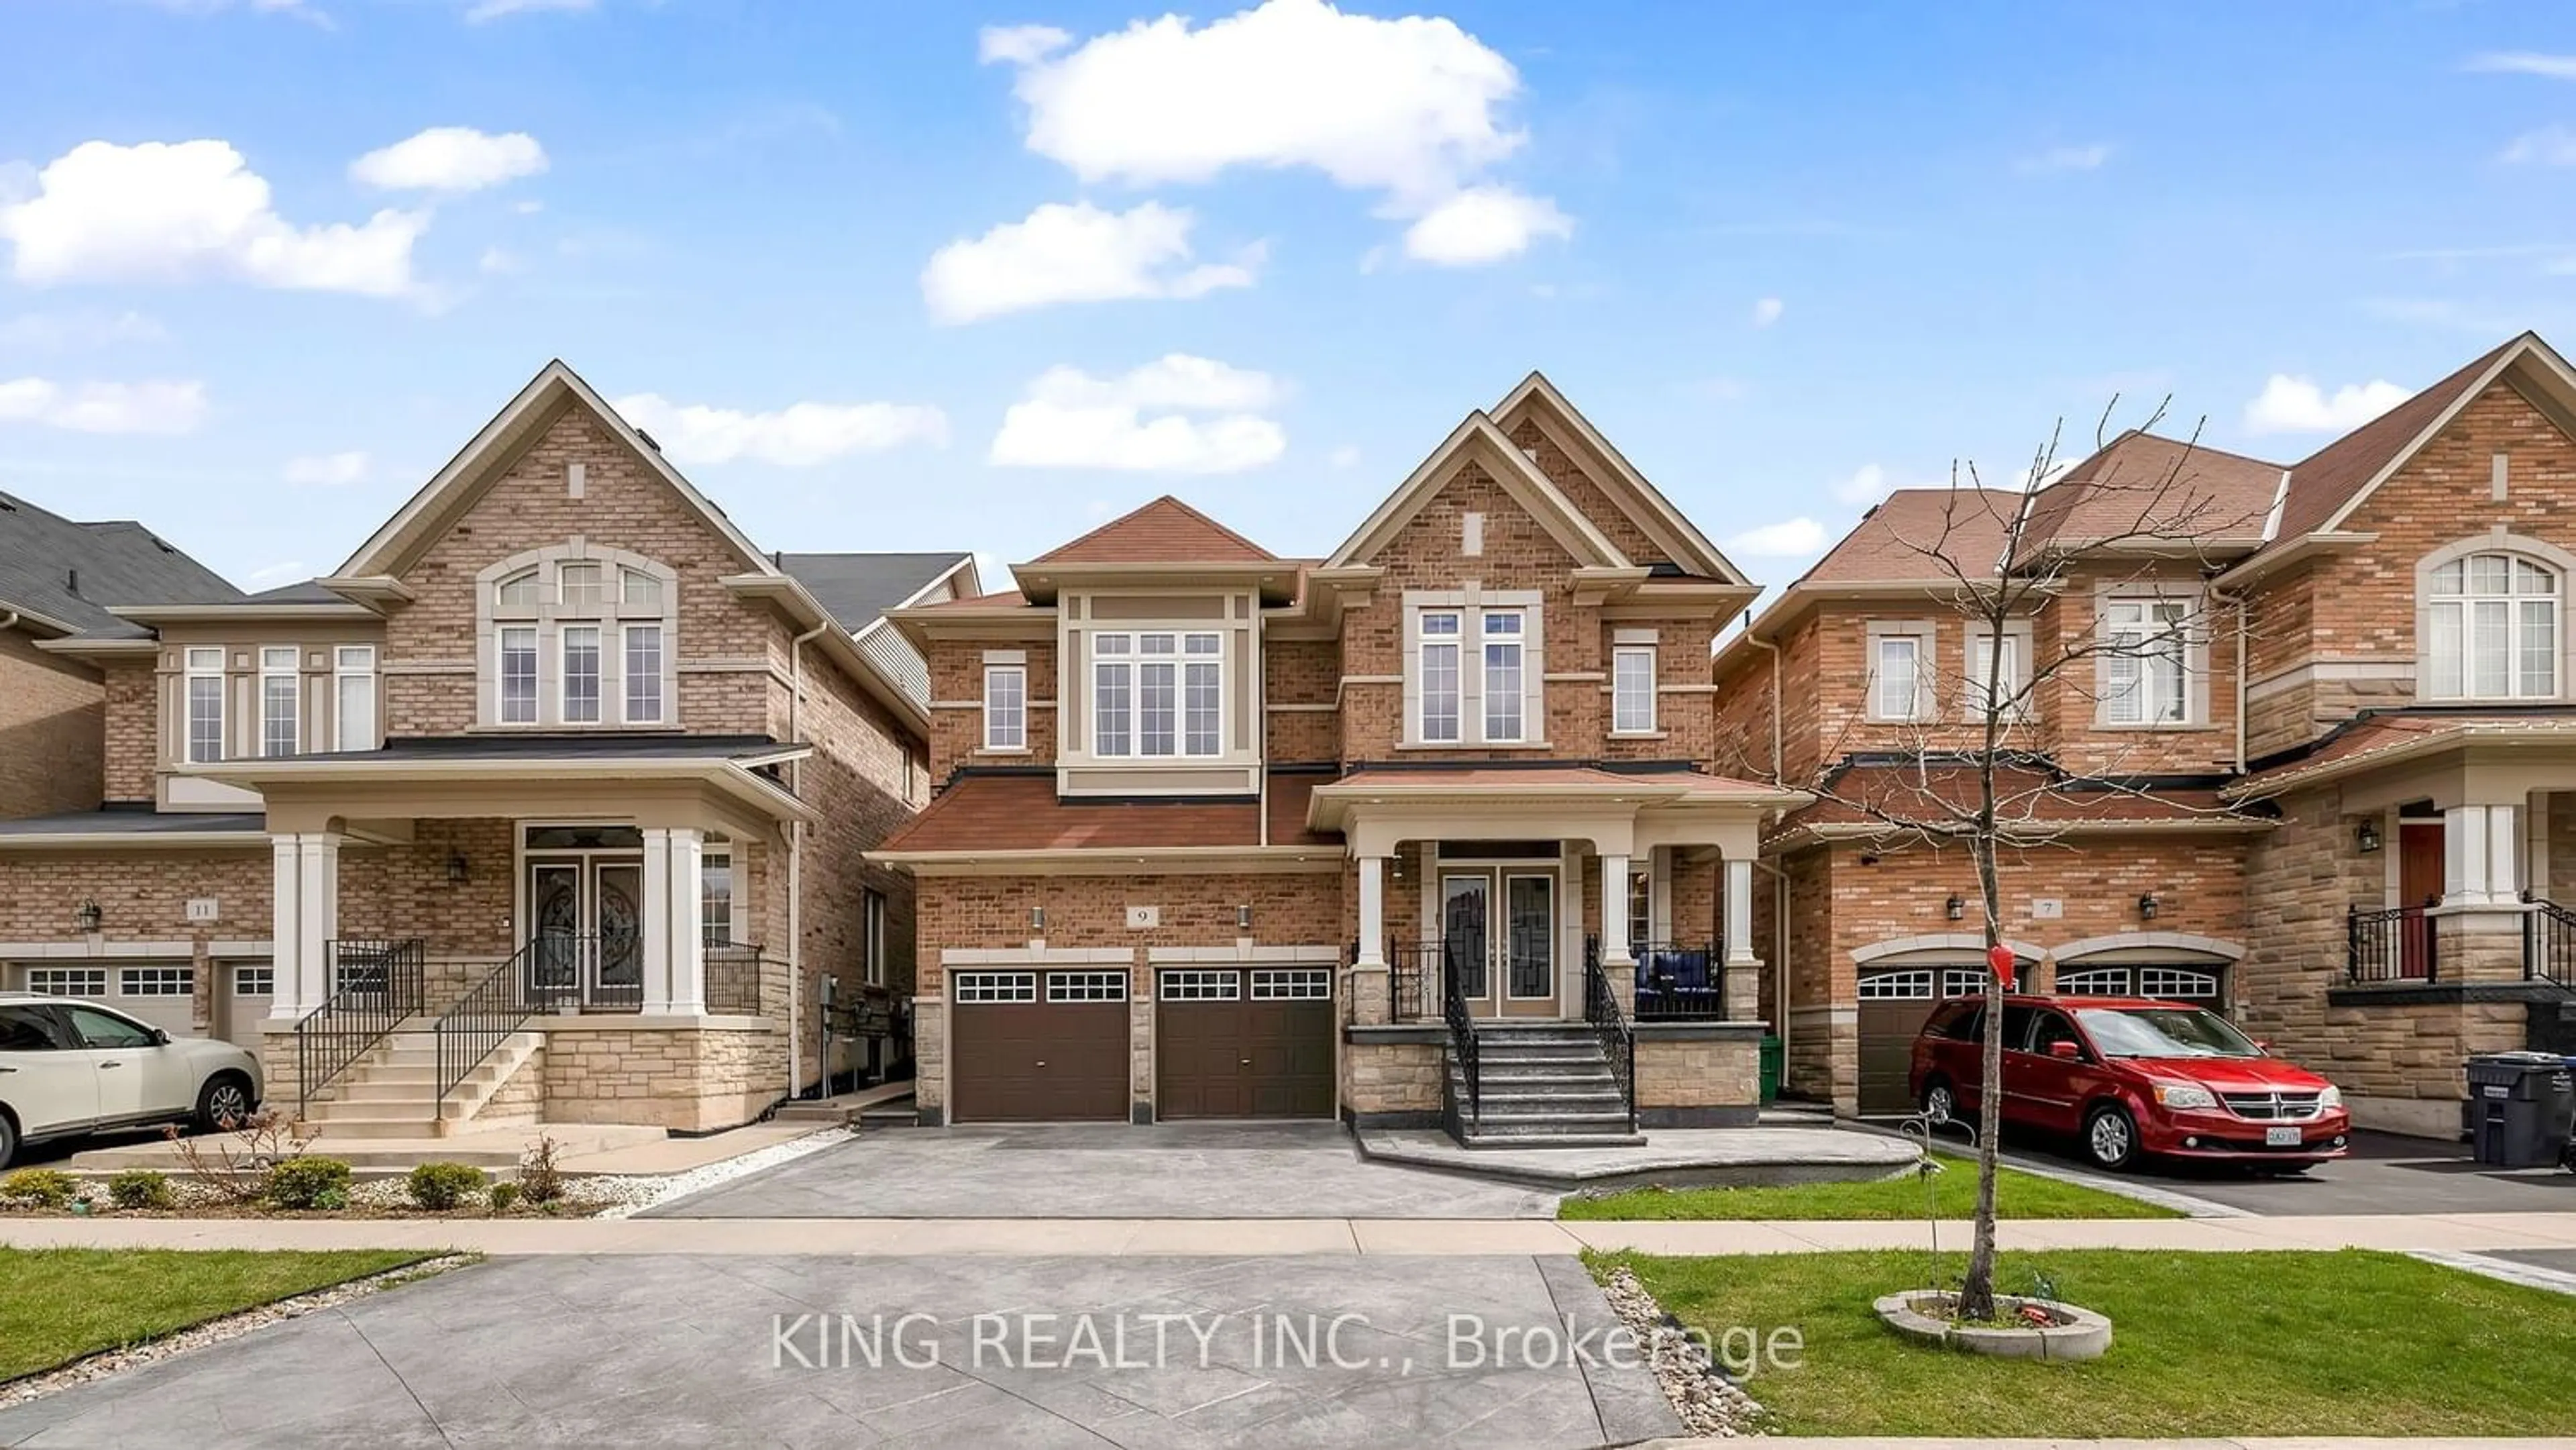 Home with brick exterior material for 9 Monkton Circ, Brampton Ontario L6Y 0X1